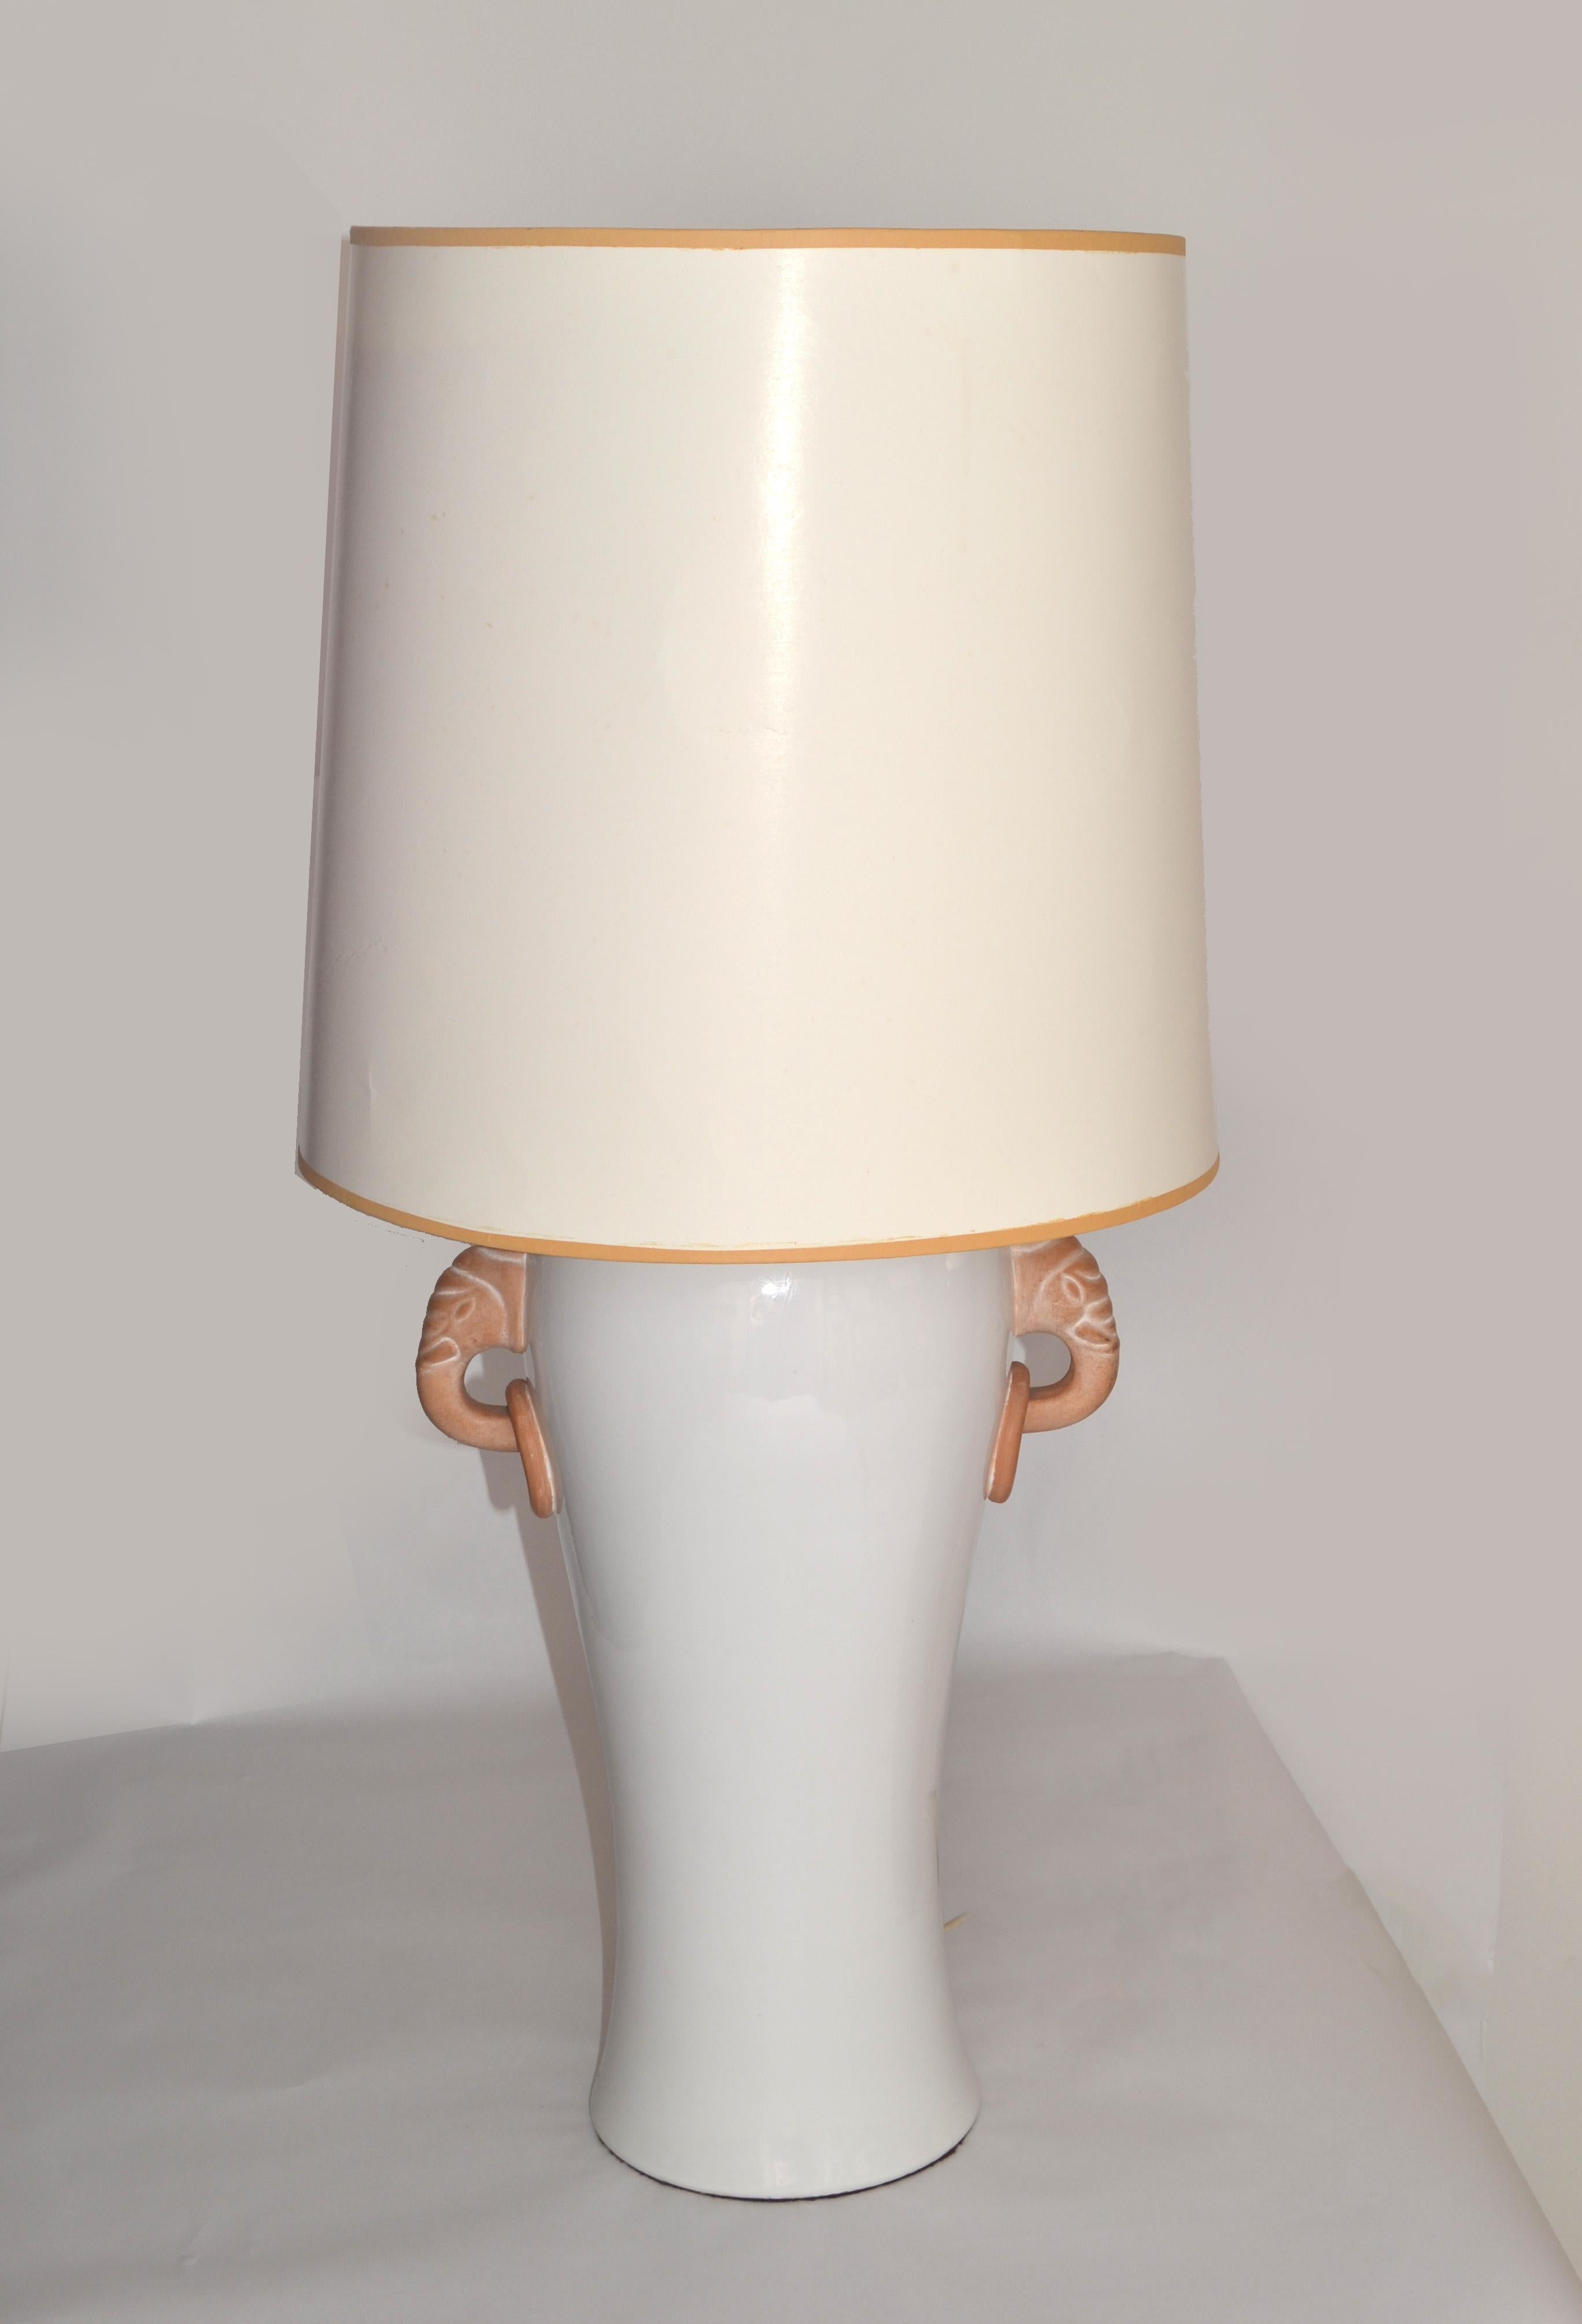 Brass Oriental Terracotta Ginger Jar Elephant Handles Table Lamp Hollywood Regency For Sale